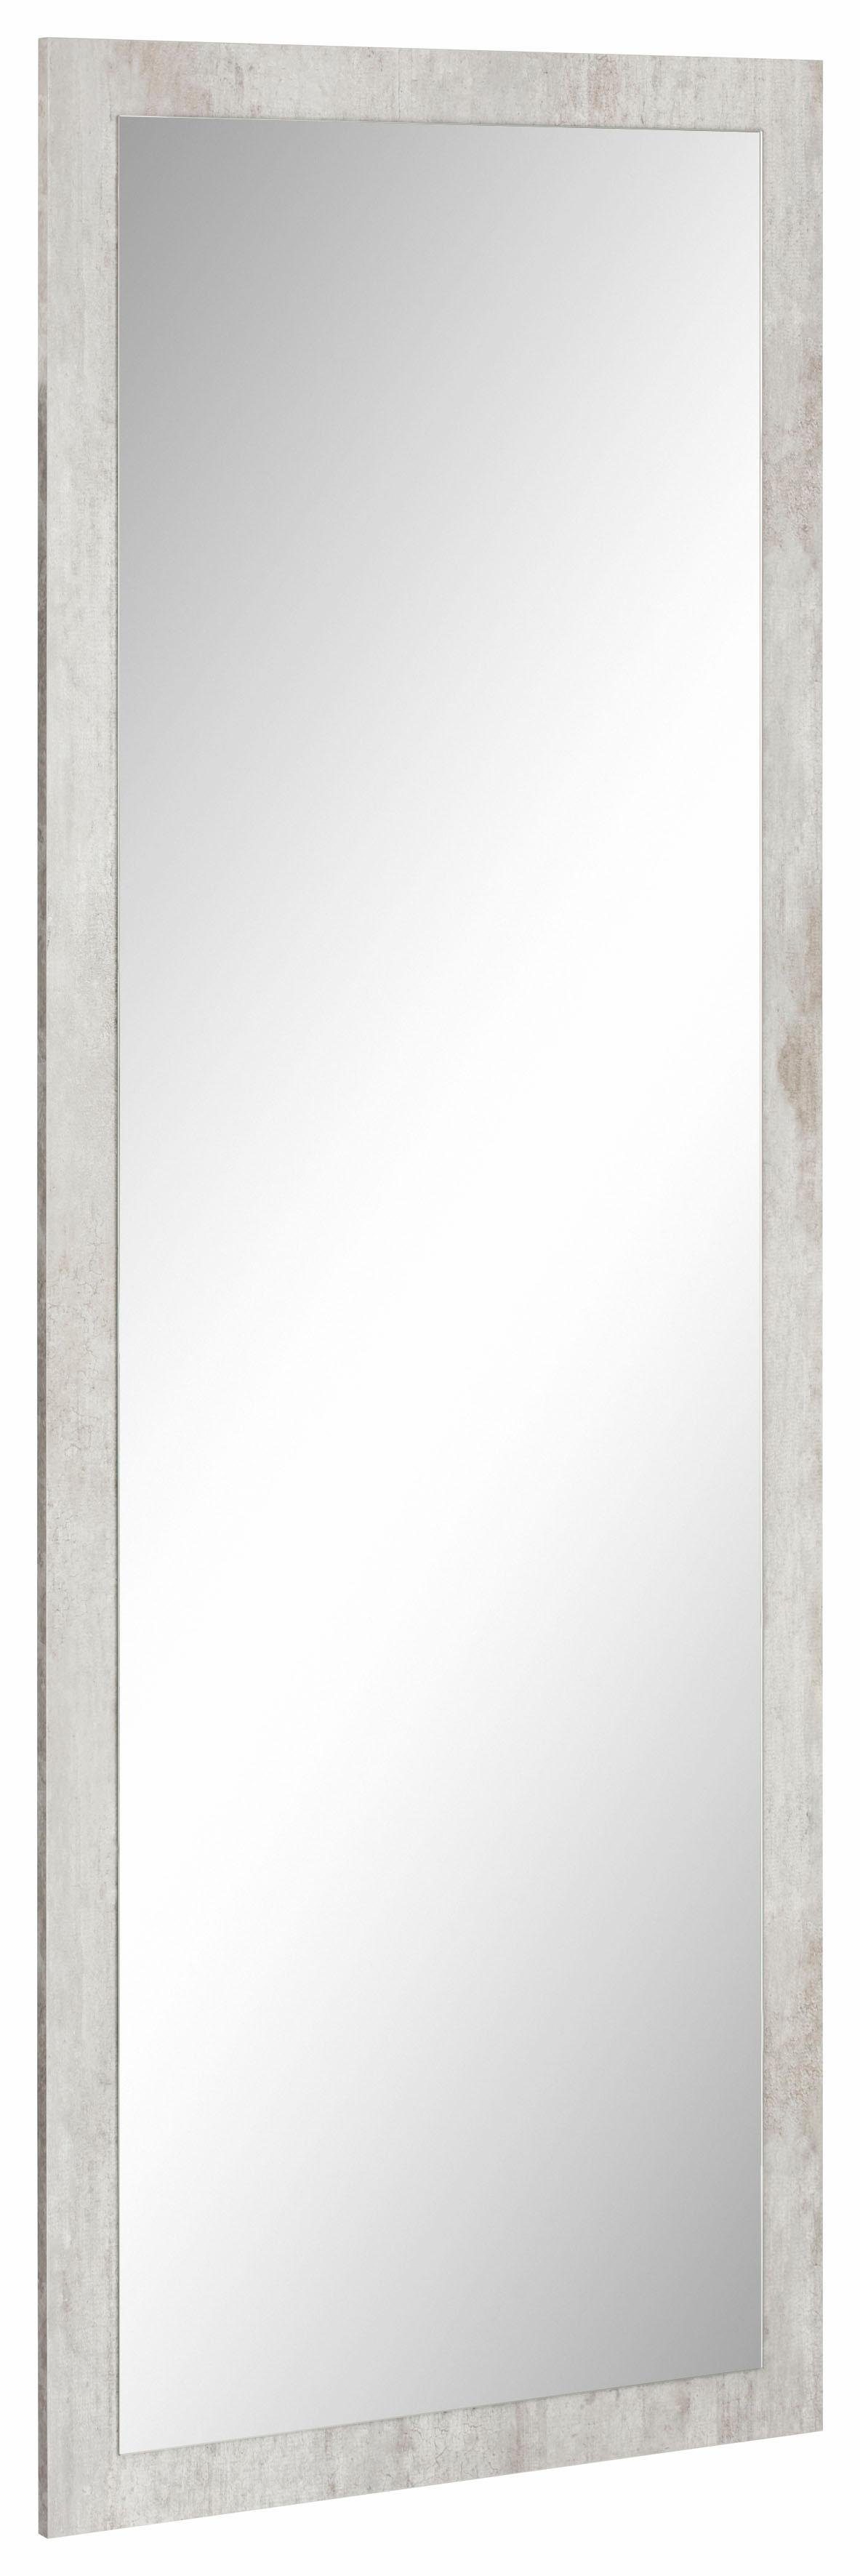 Borchardt Möbel Spiegel Panama